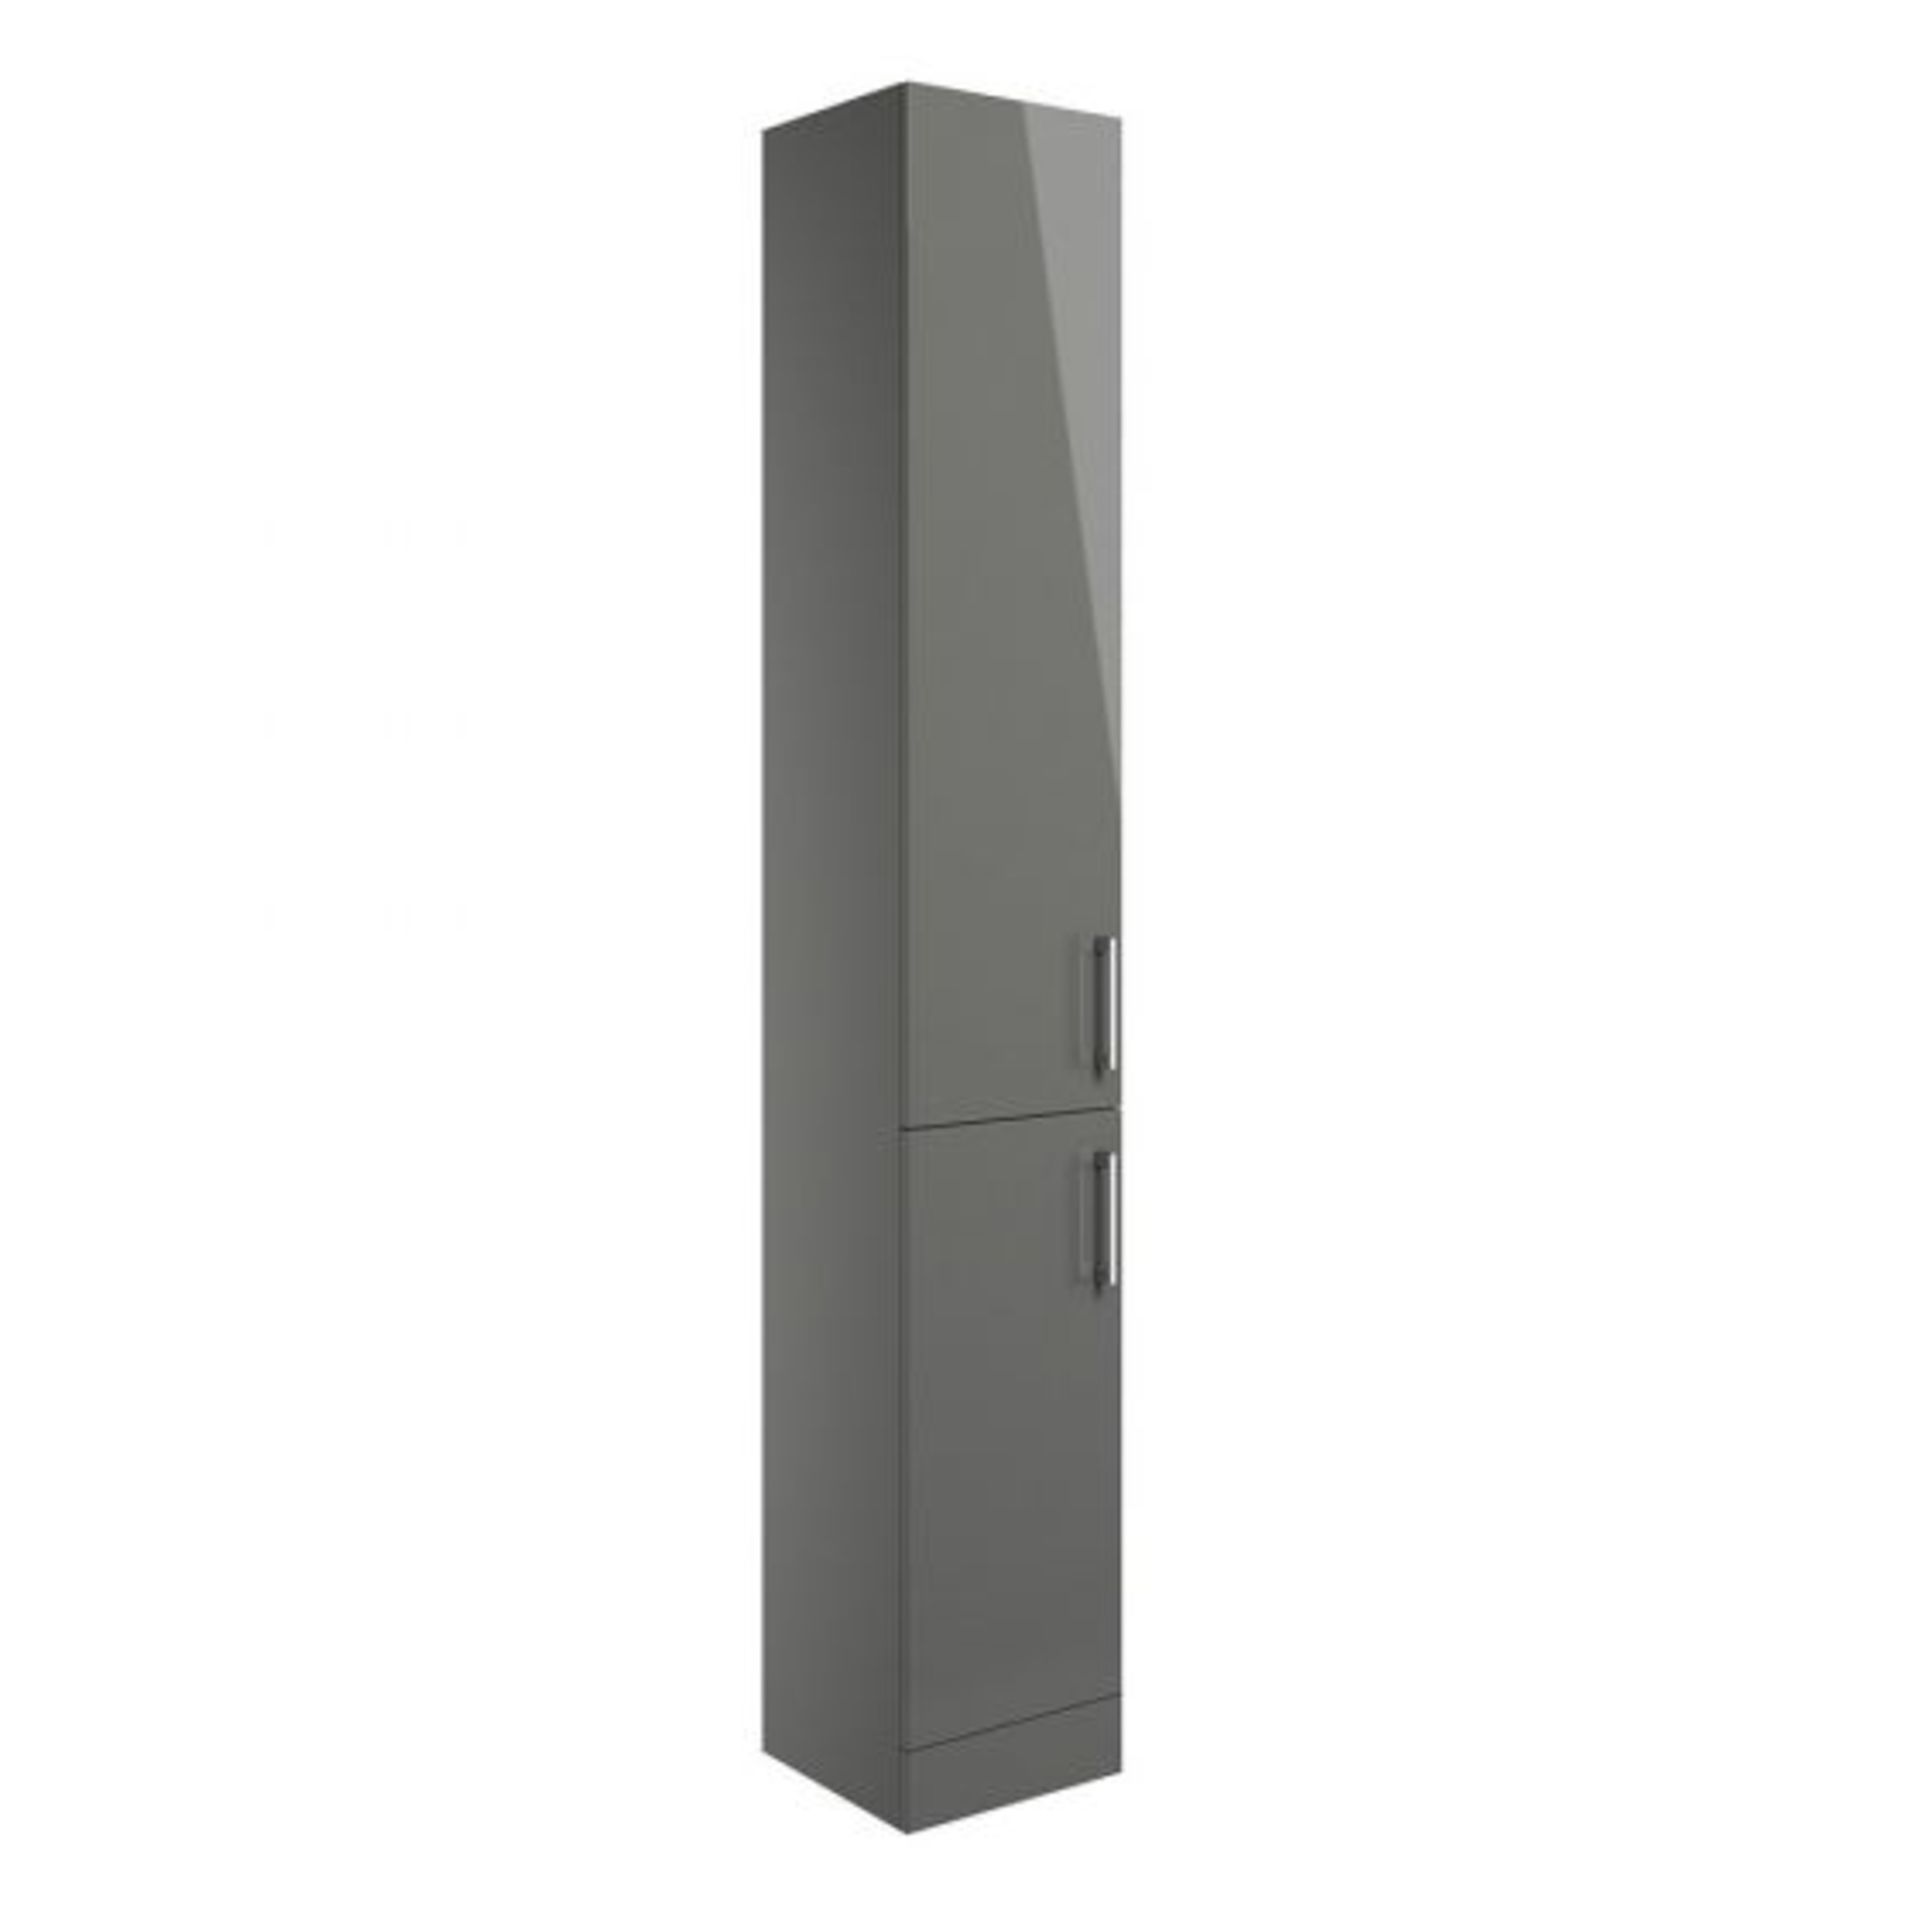 New (Y106) Volta 300mm 2 Door Floor Standing Tall Unit - Grey Gloss. RRP £326.00. Soft Close... - Image 2 of 2